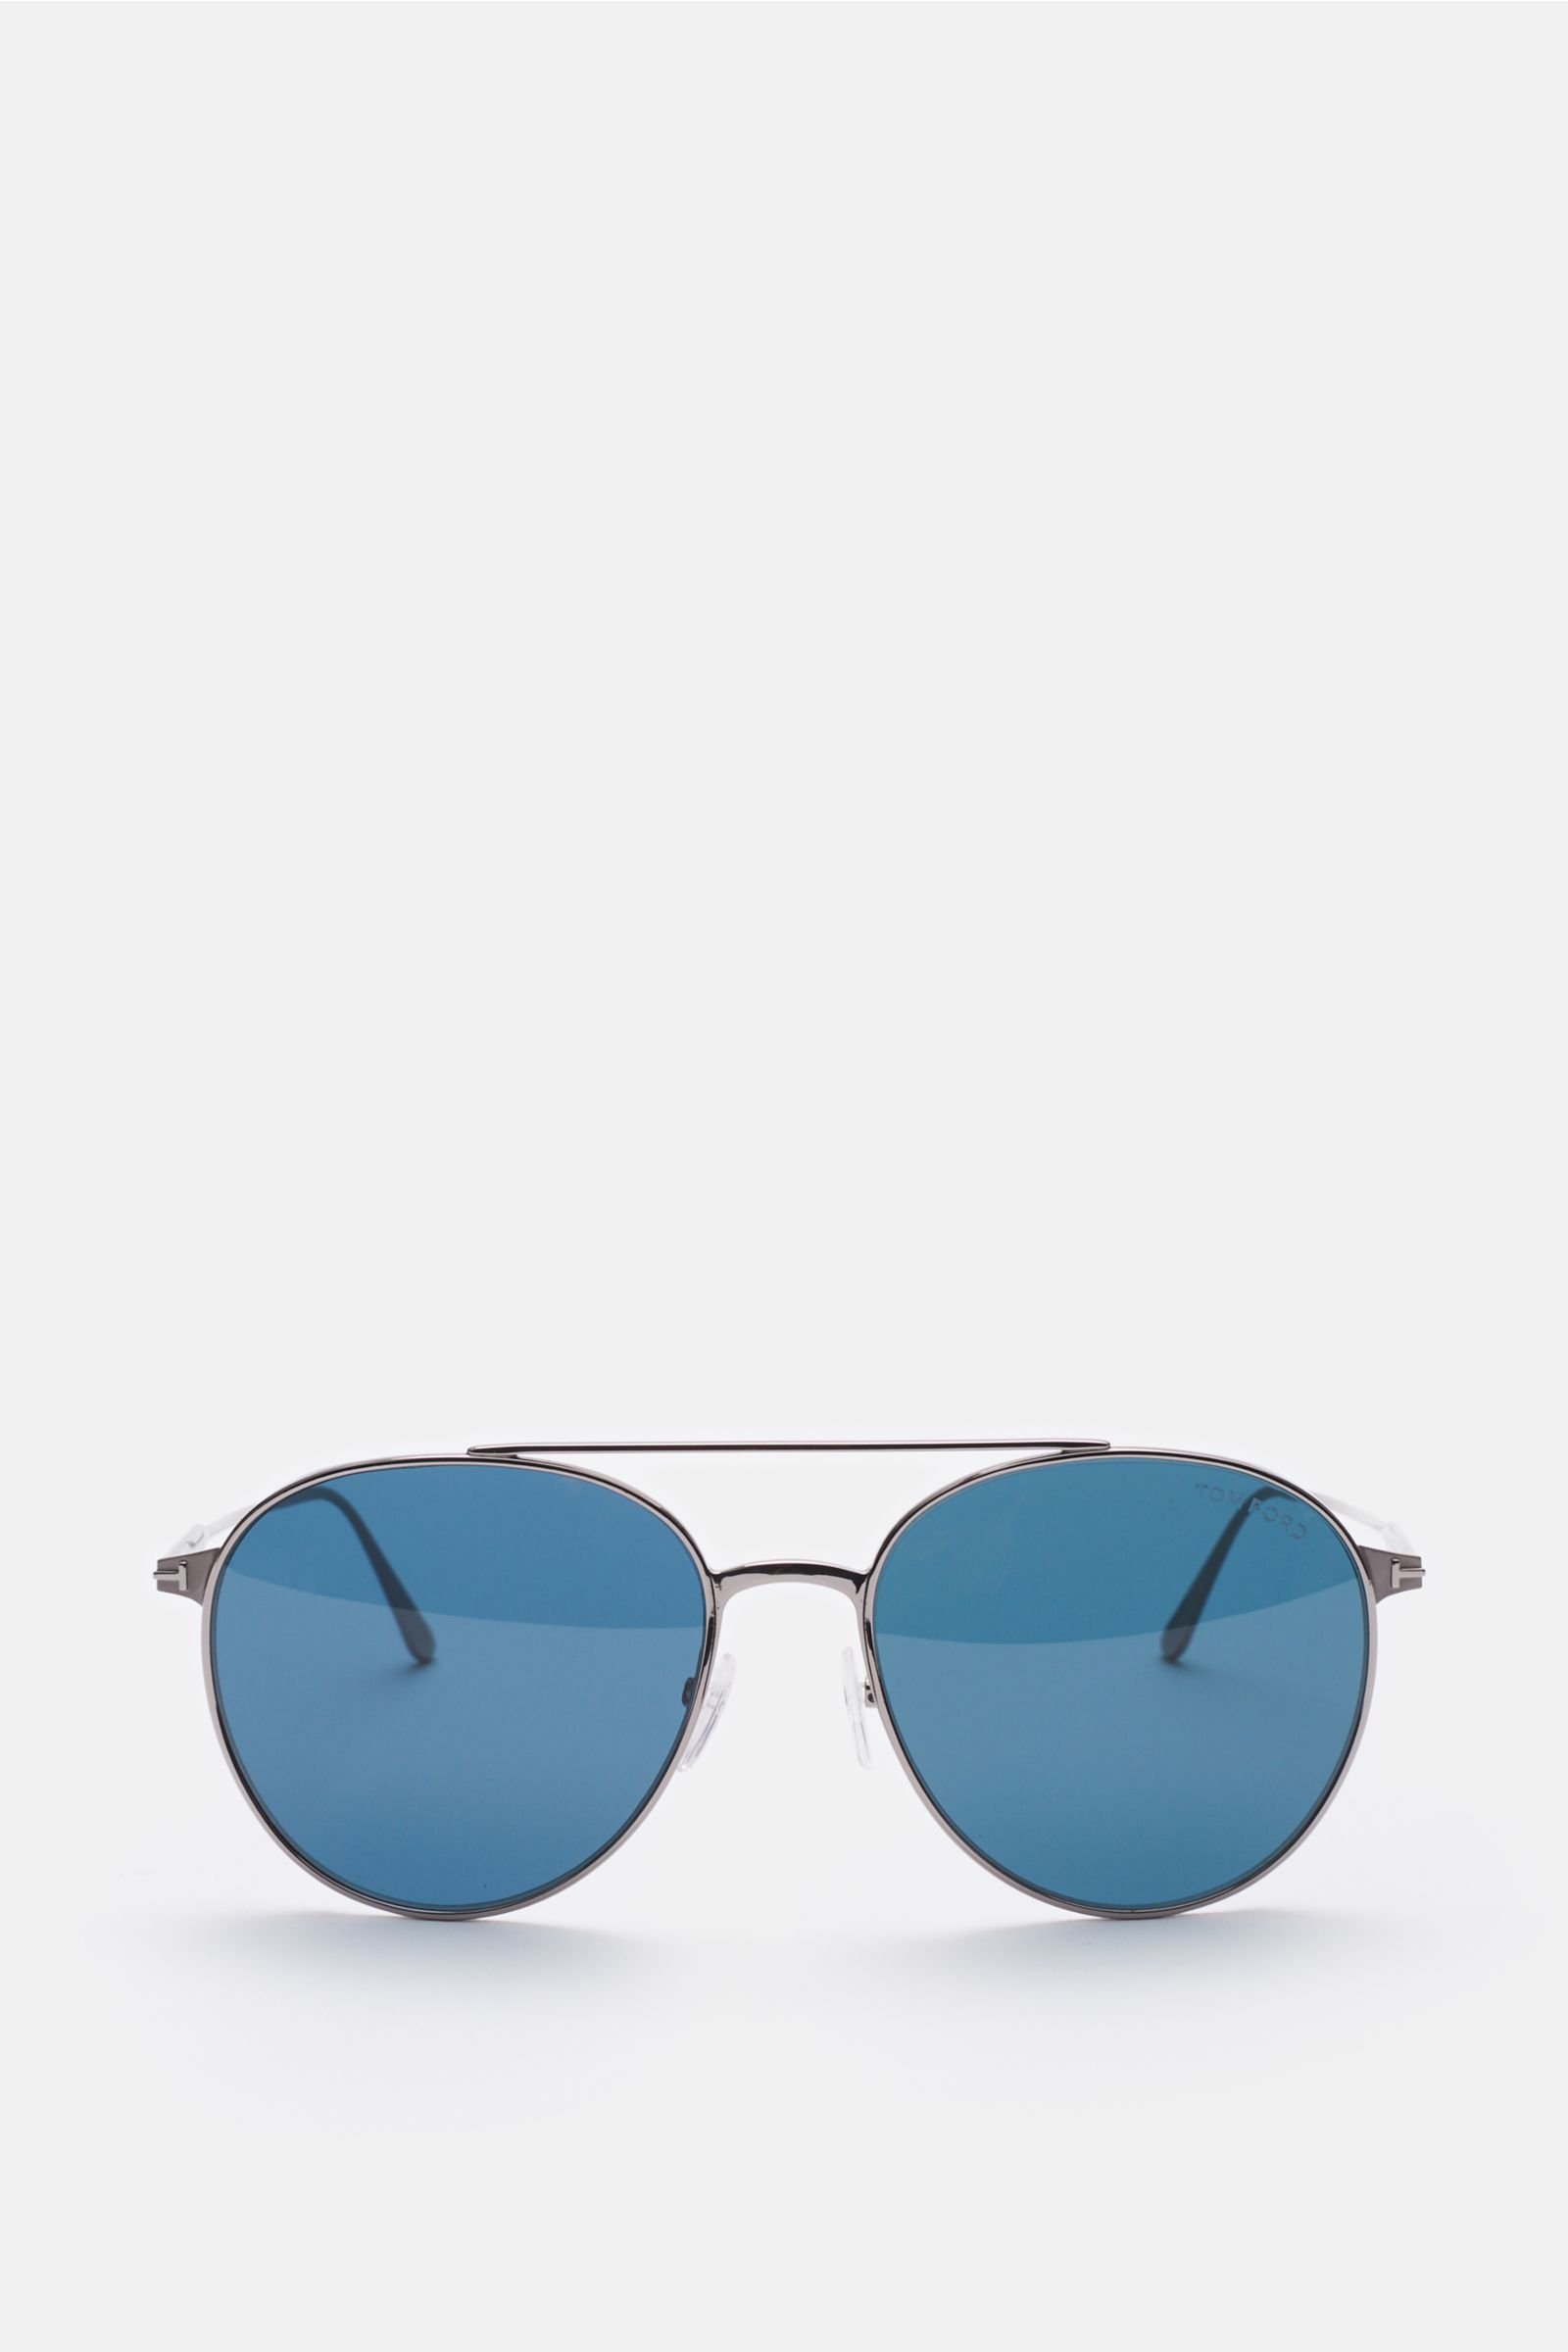 Sonnenbrille 'Tomaso' silber/petrol